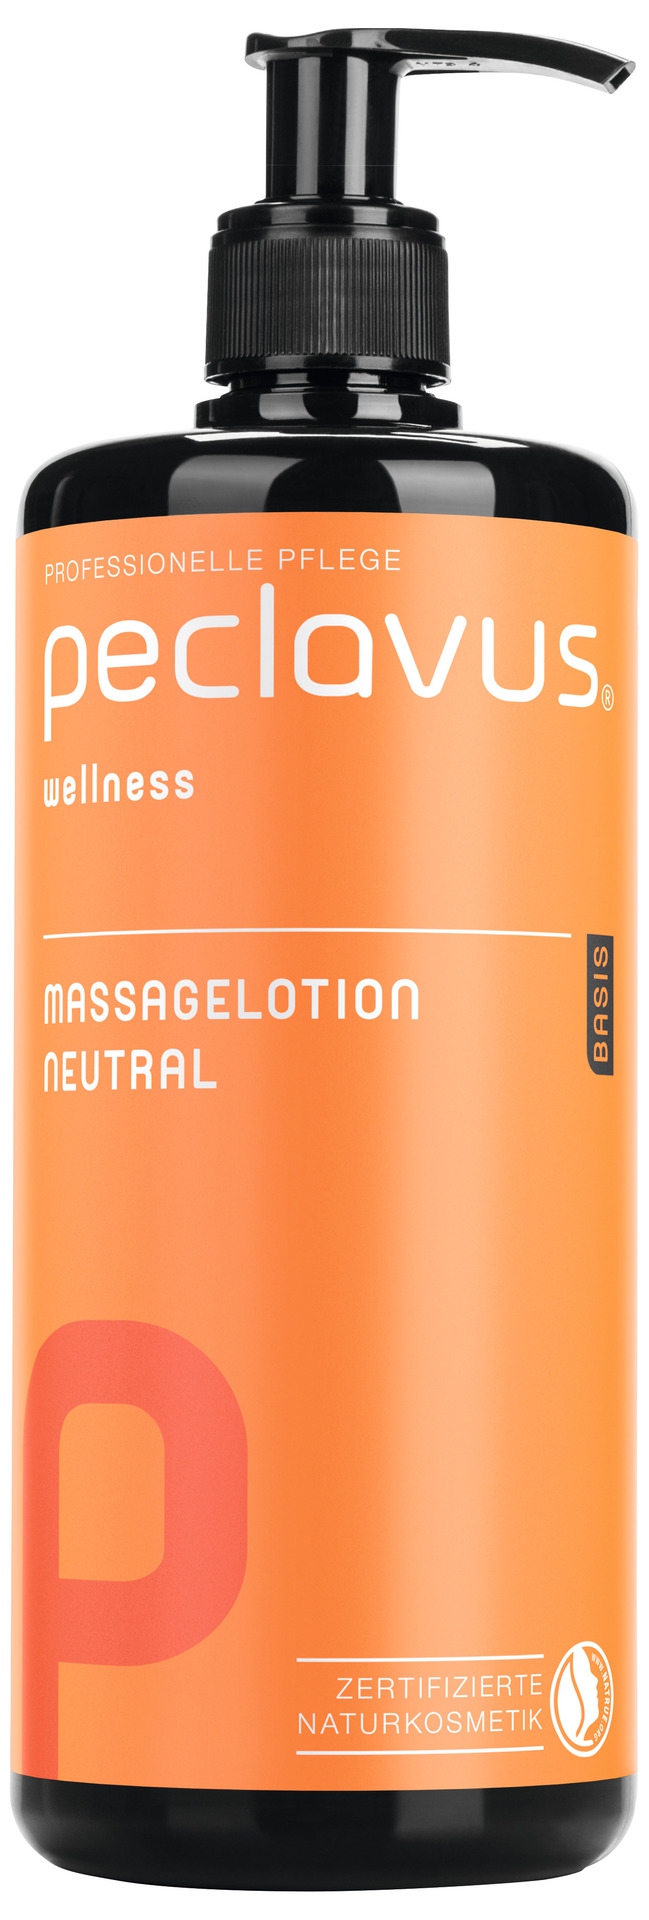 PECLAVUS Massagelotion Neutral 500 ml | Basis (Staffelpreis)